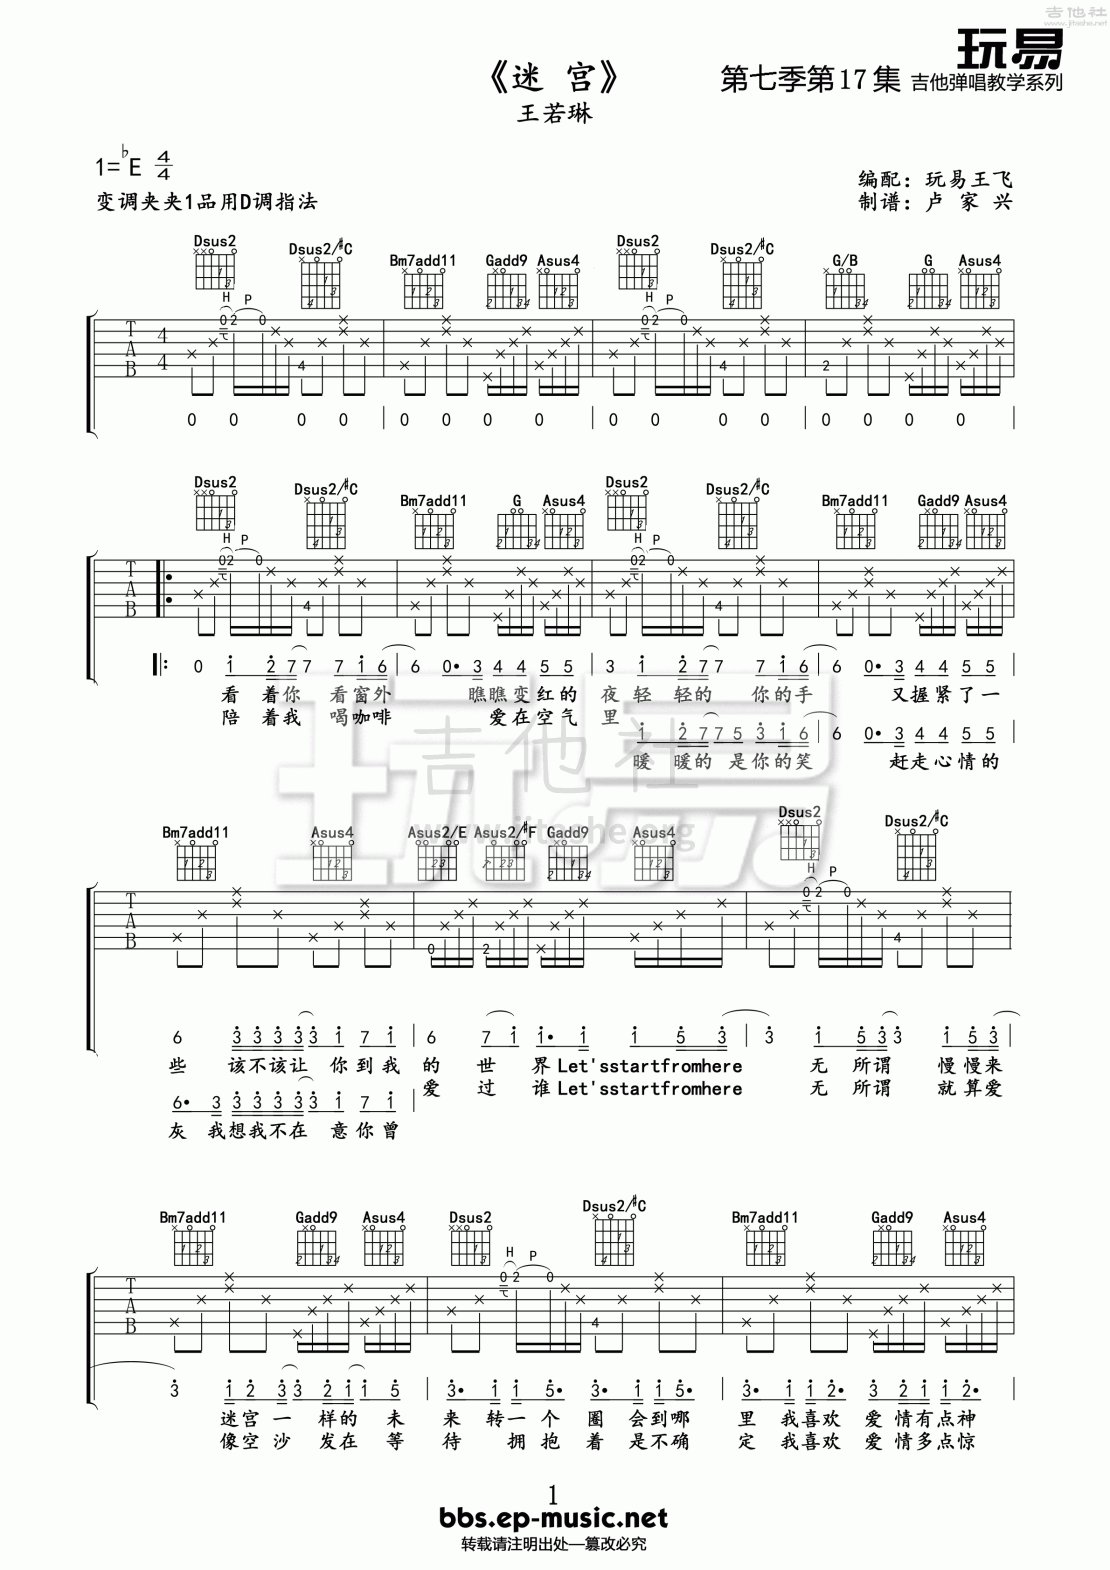 Vincent吉他谱 - DonMcLean - C调吉他弹唱谱 - 琴谱网